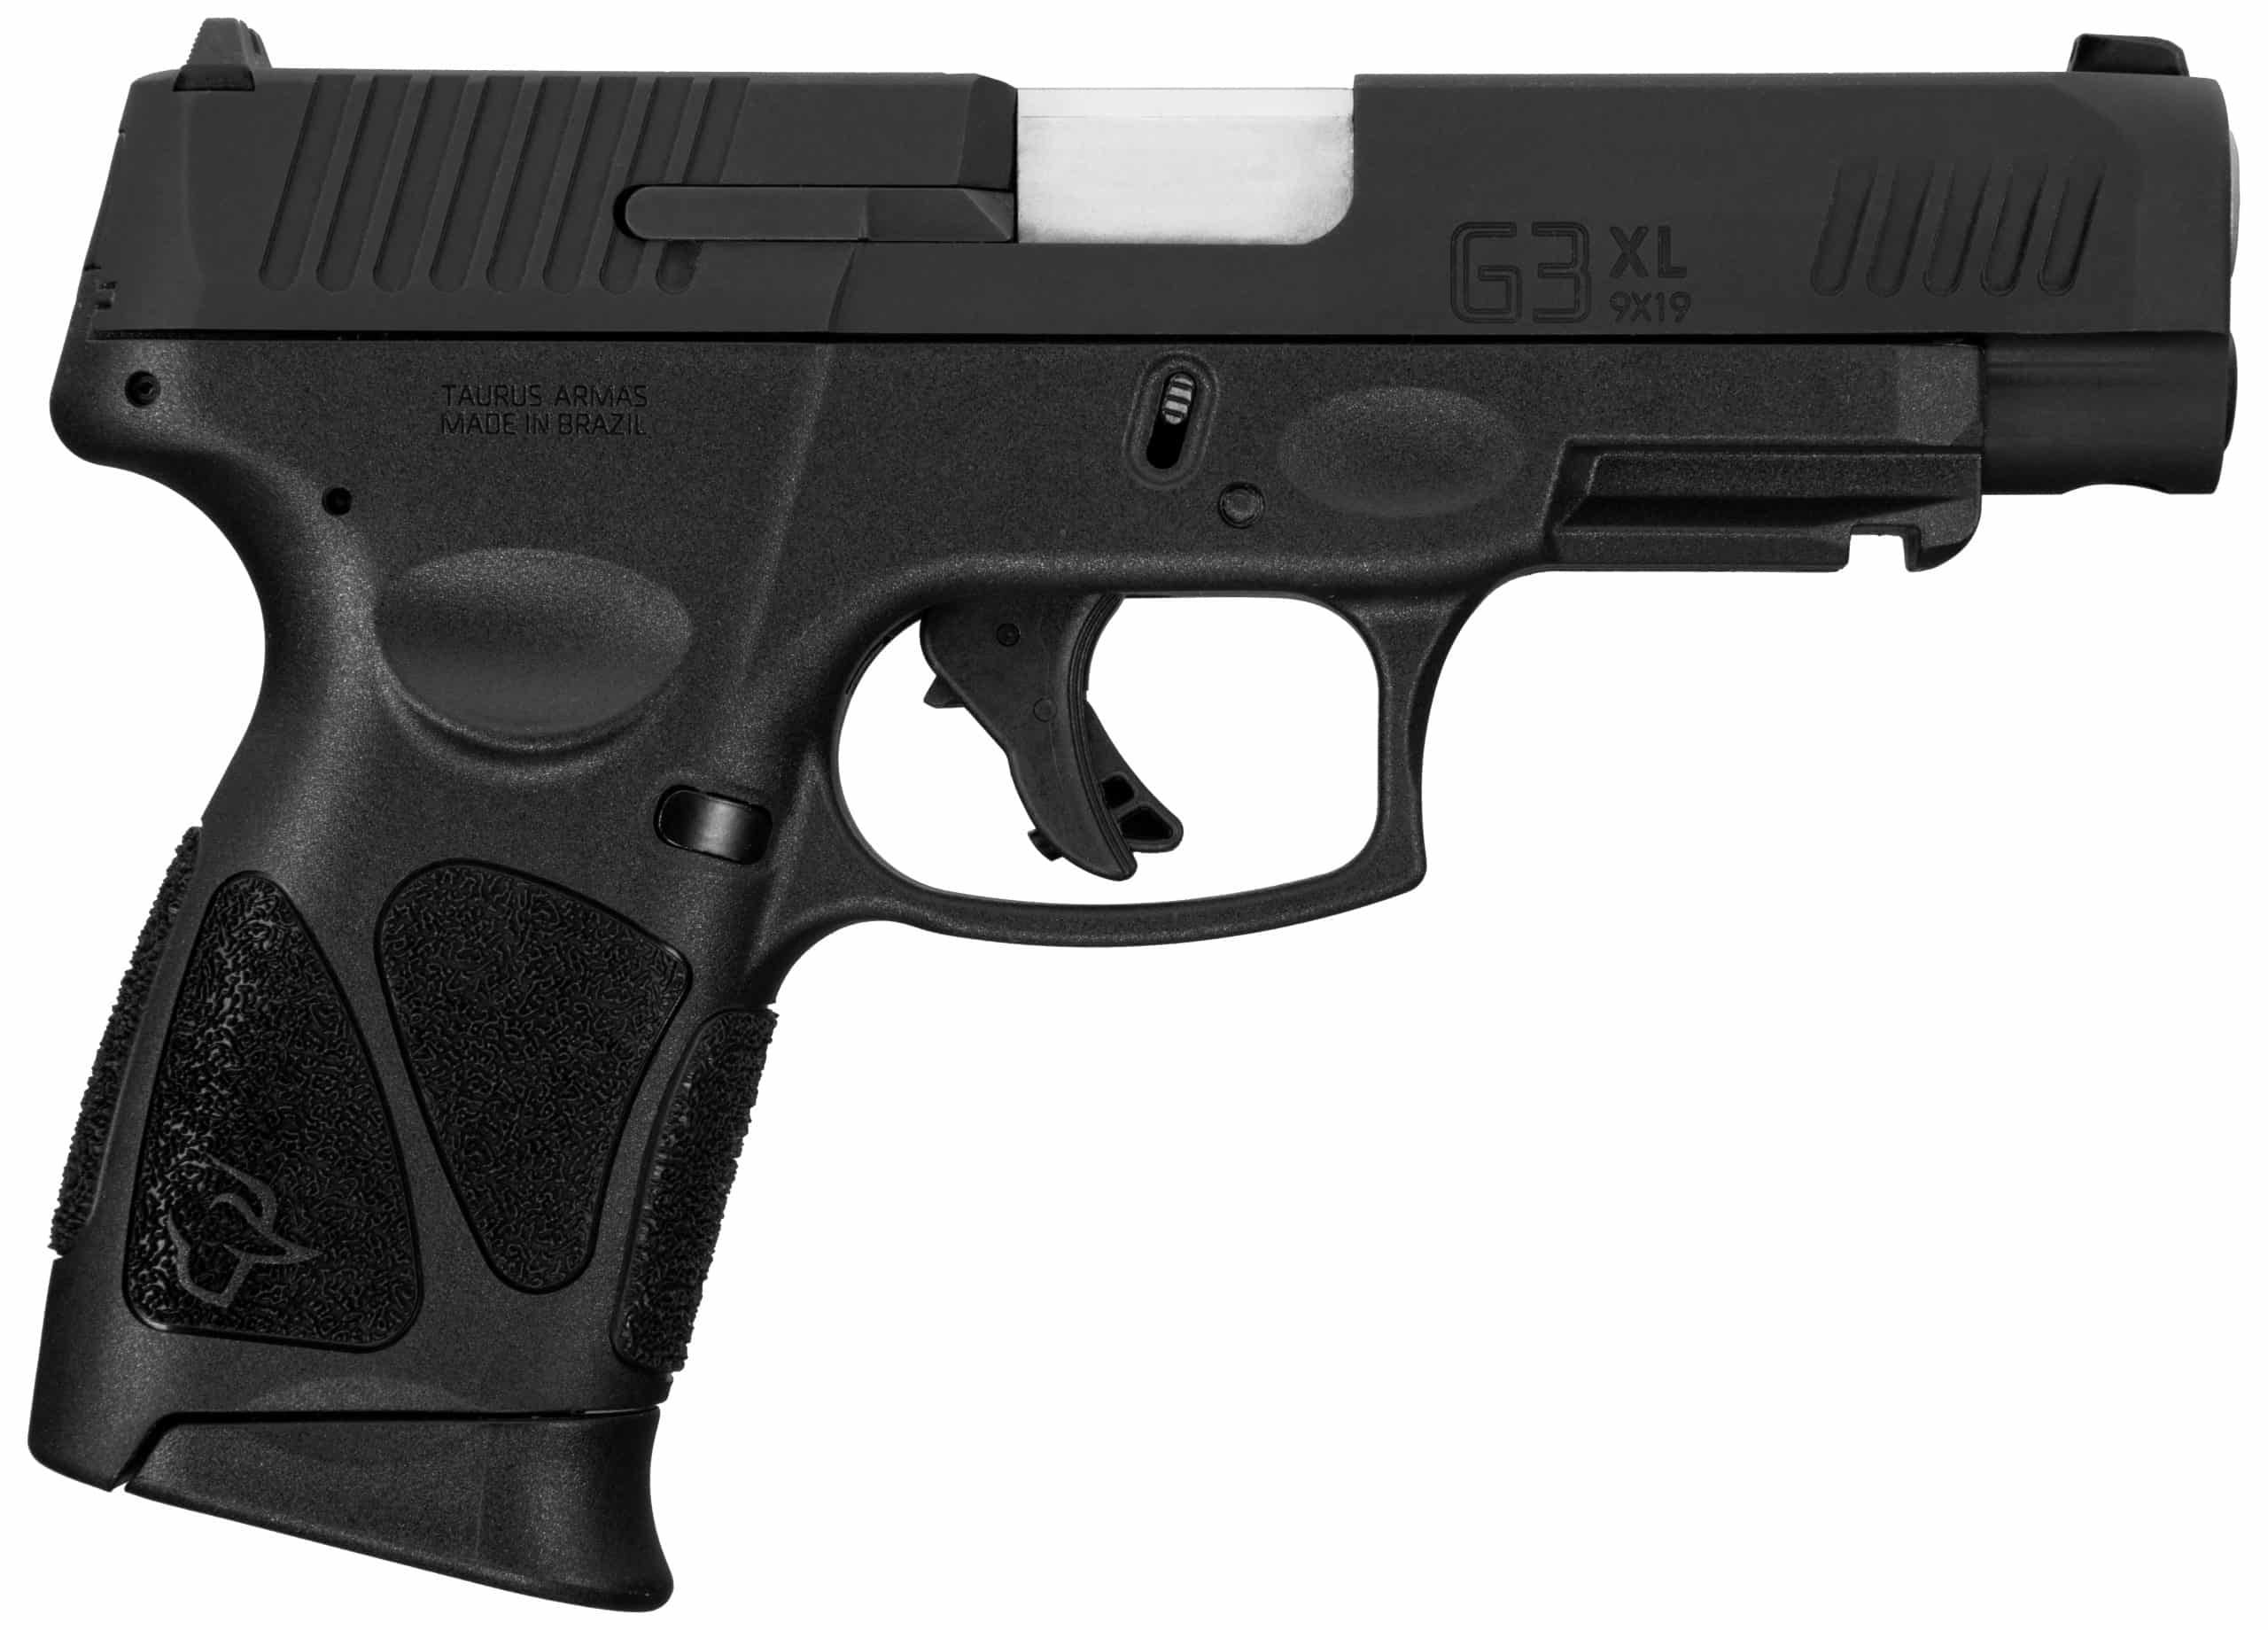 Taurus G3XL pistol G-Series Compact Pistol